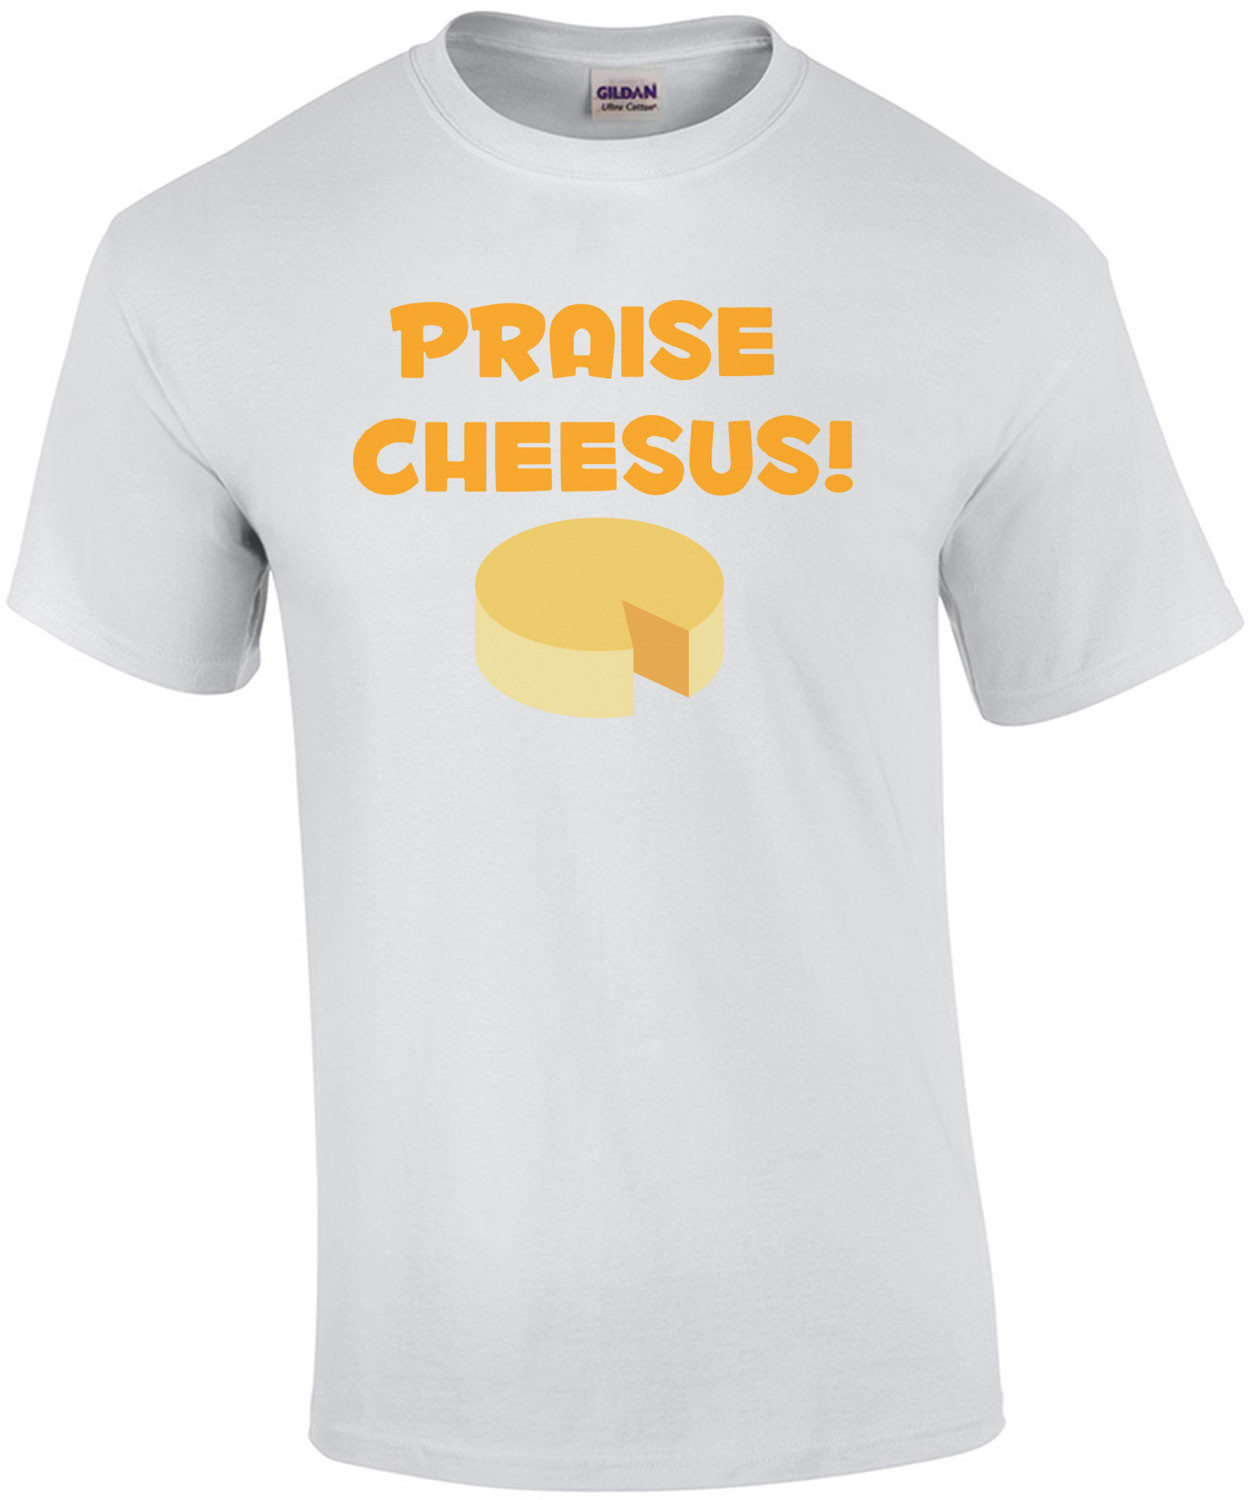 Praise Cheesus - Funny t-shirt